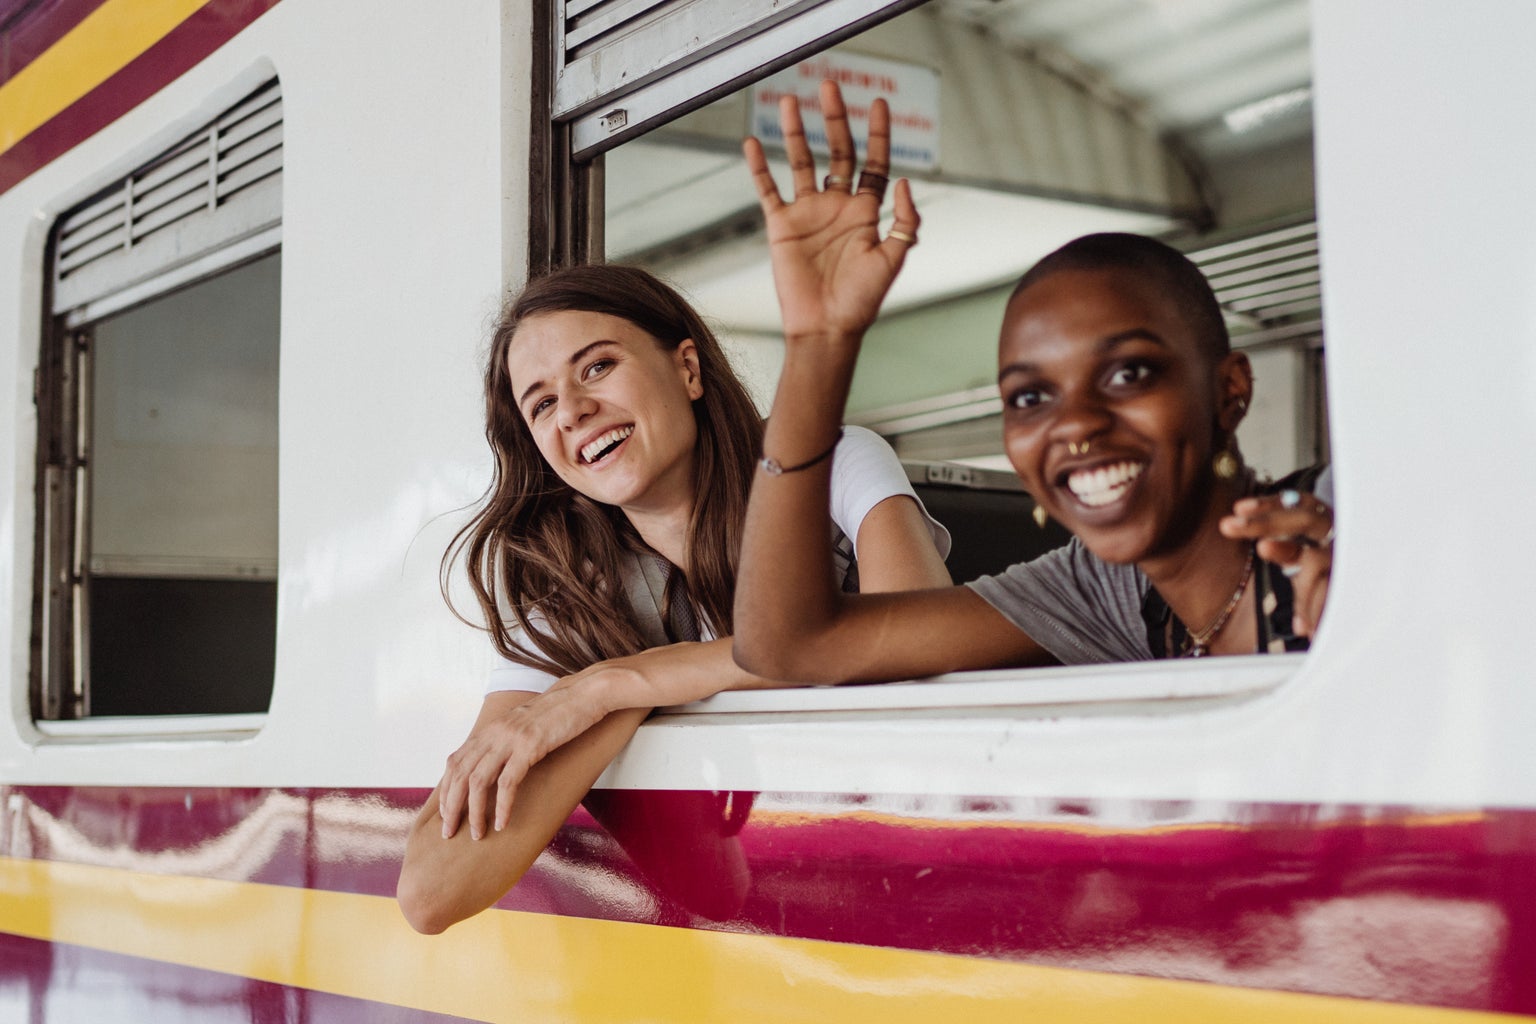 Two girls waving out a train window.